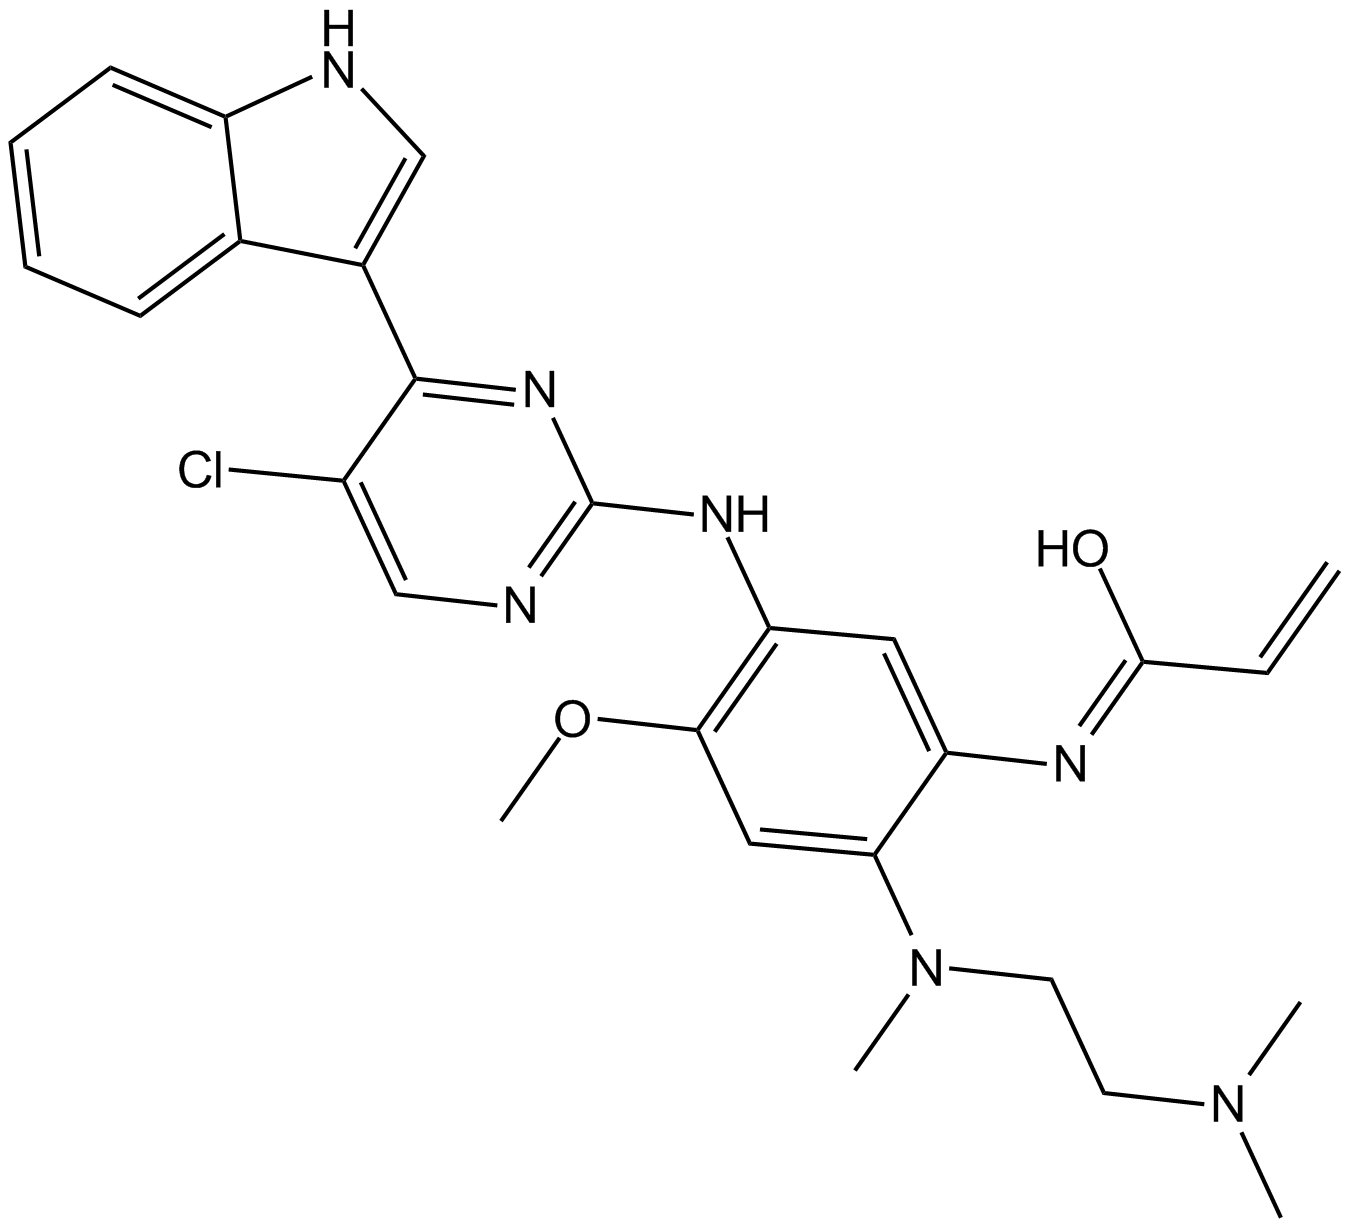 Mutant EGFR inhibitor